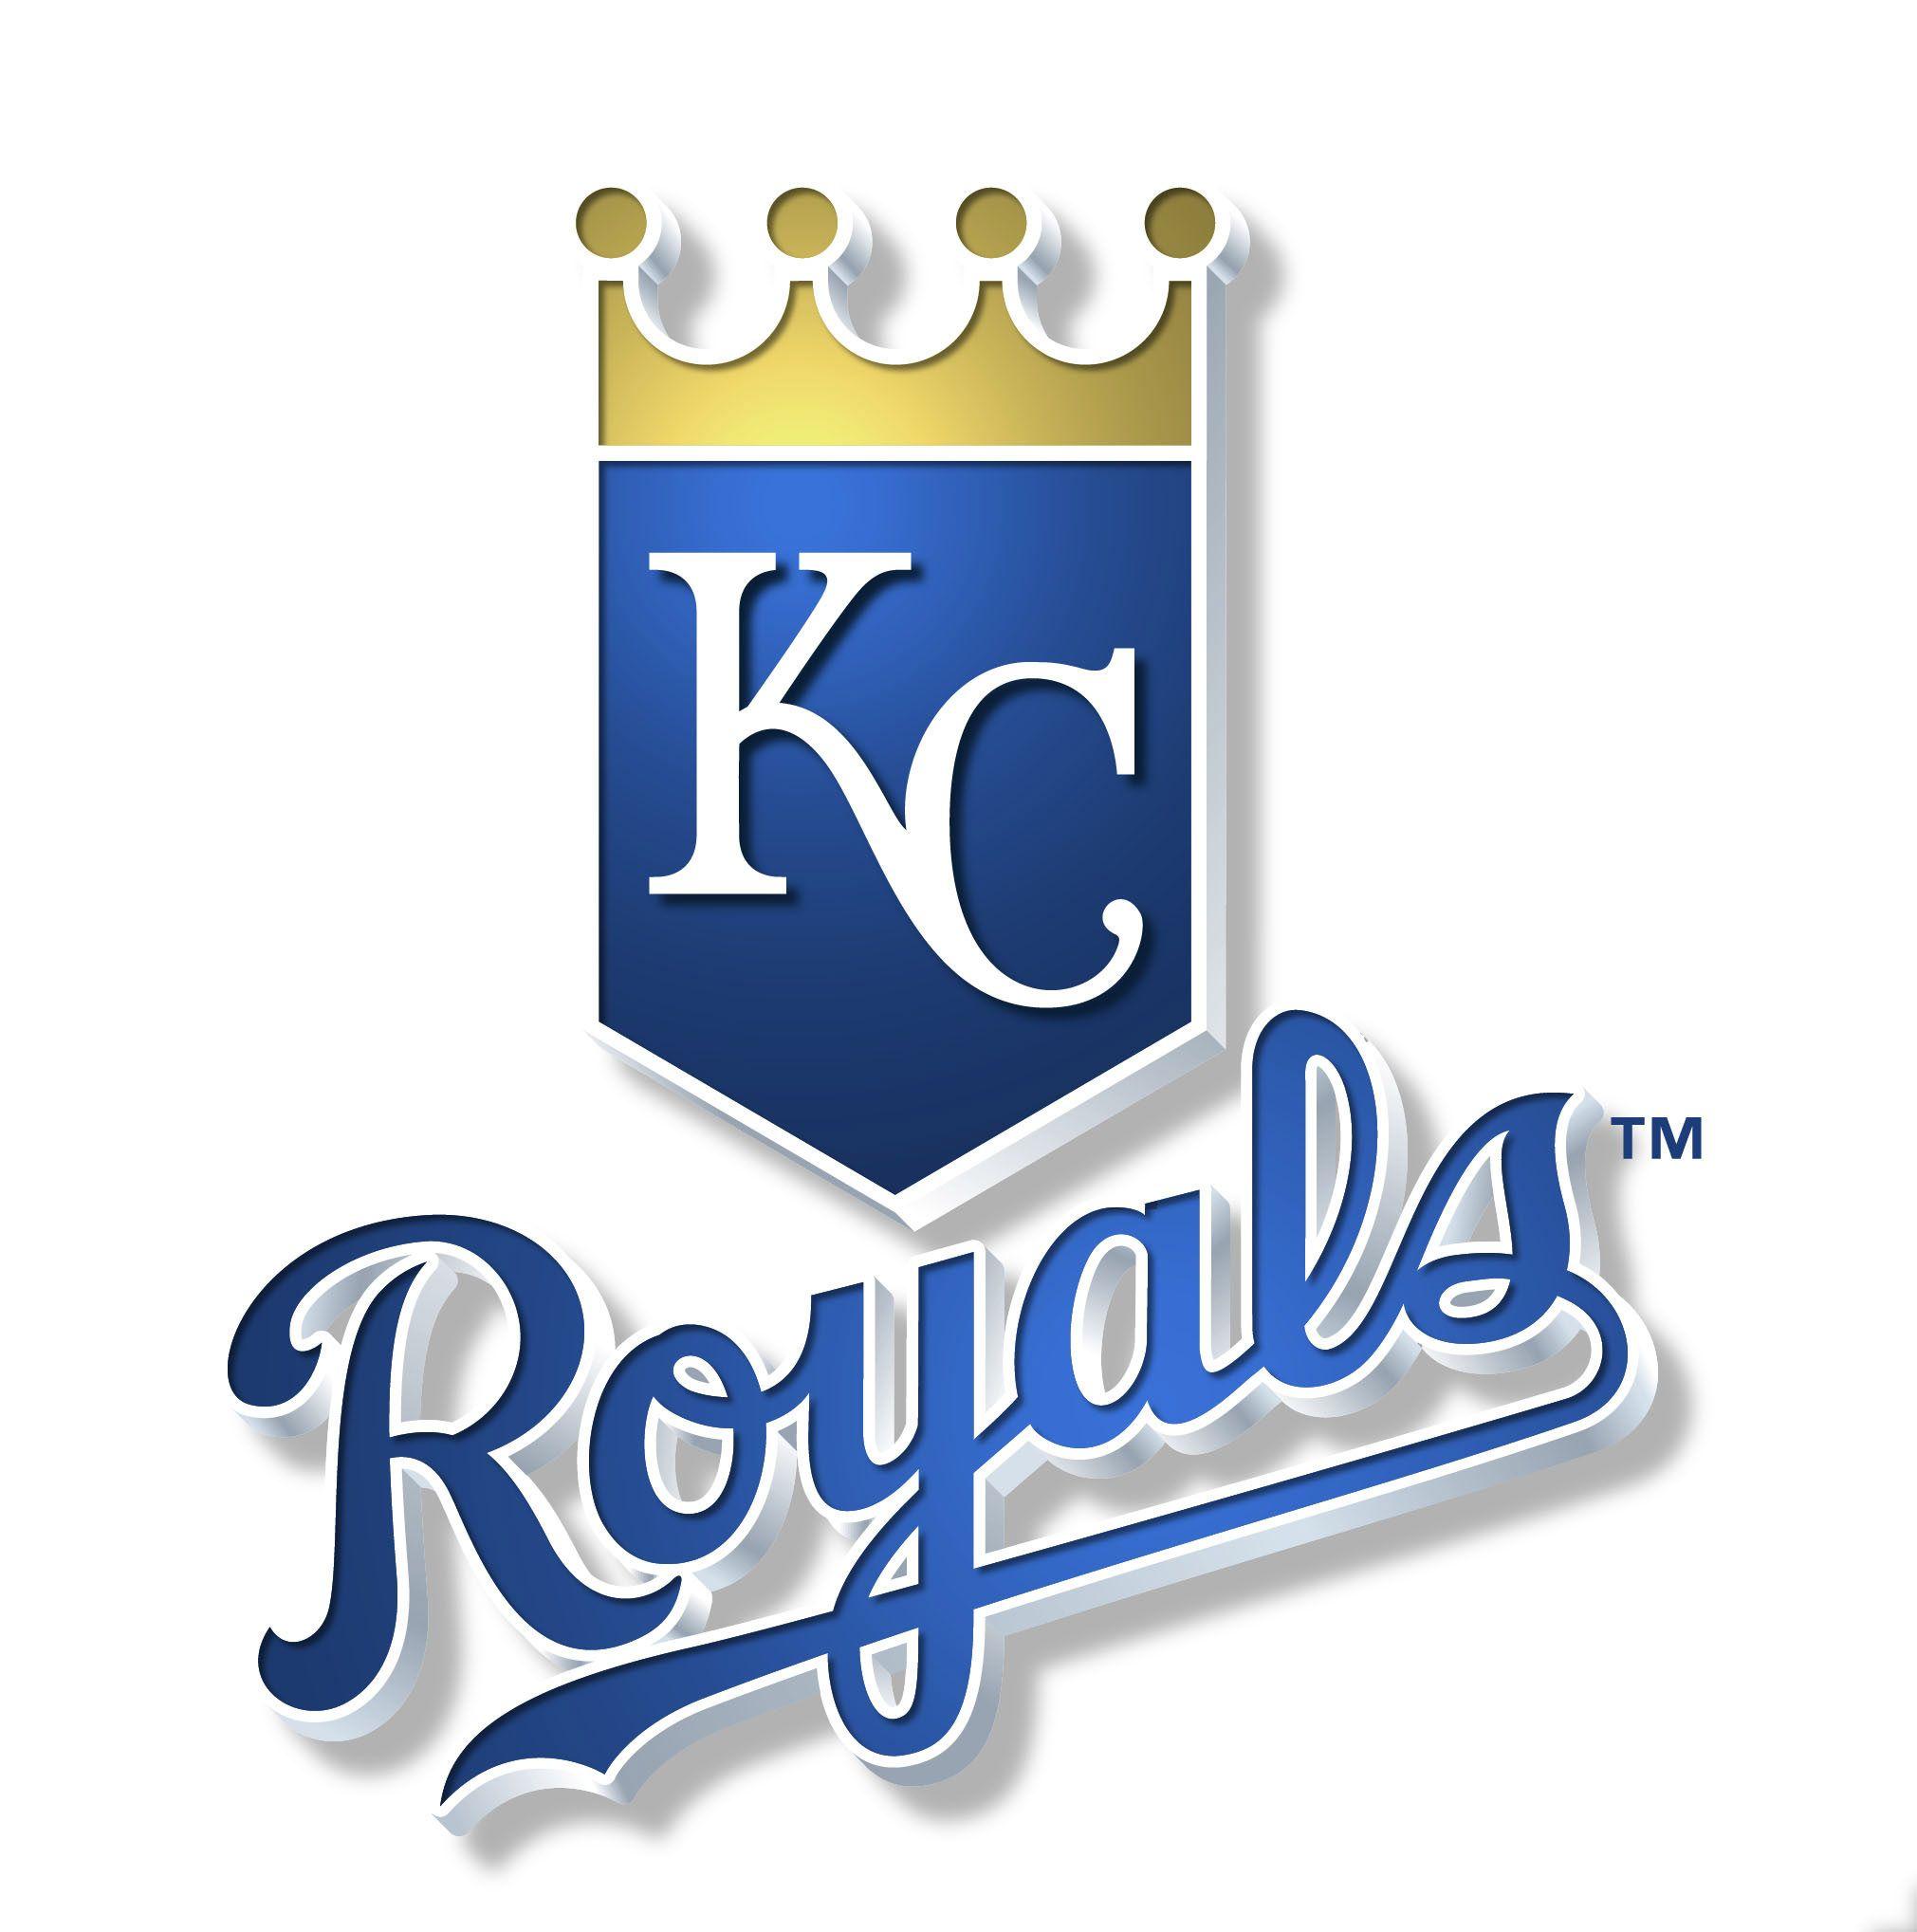 Royals Baseball Logo - jesus baseball logo - Google Search | sports logos | Pinterest ...